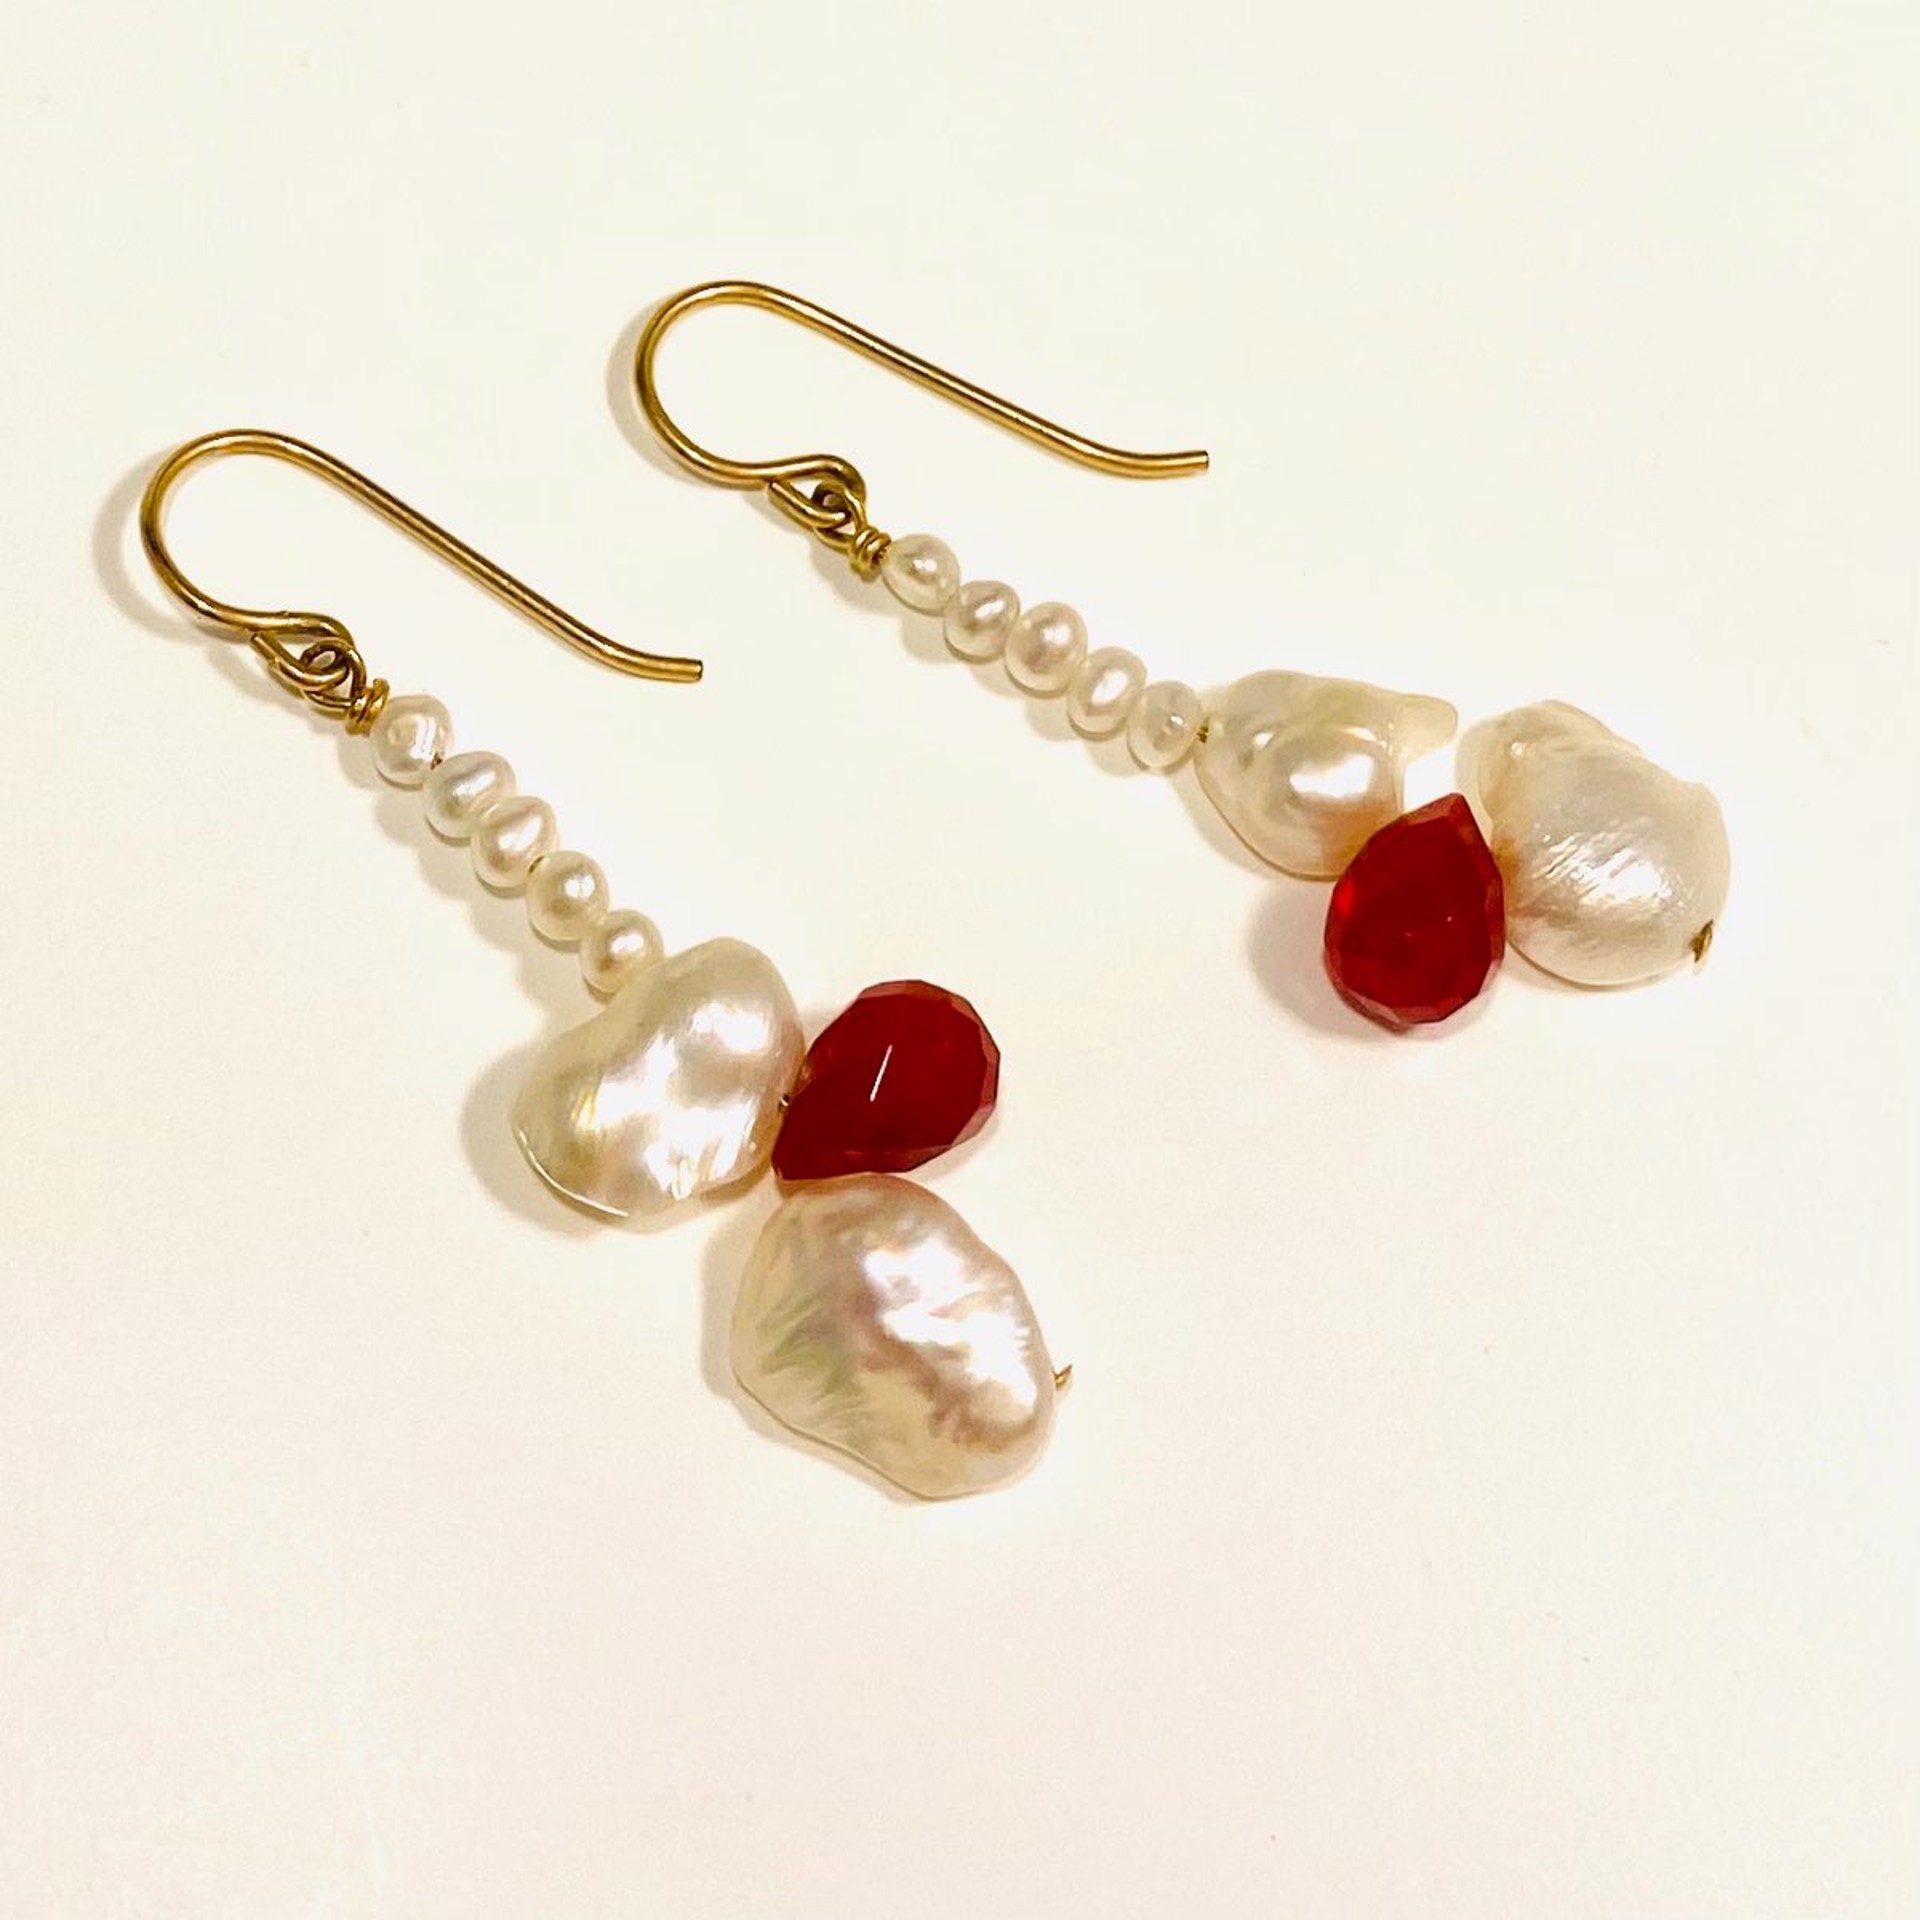 NT22-135 Pearl Ruby and Seed Pearl Earrings by Nance Trueworthy